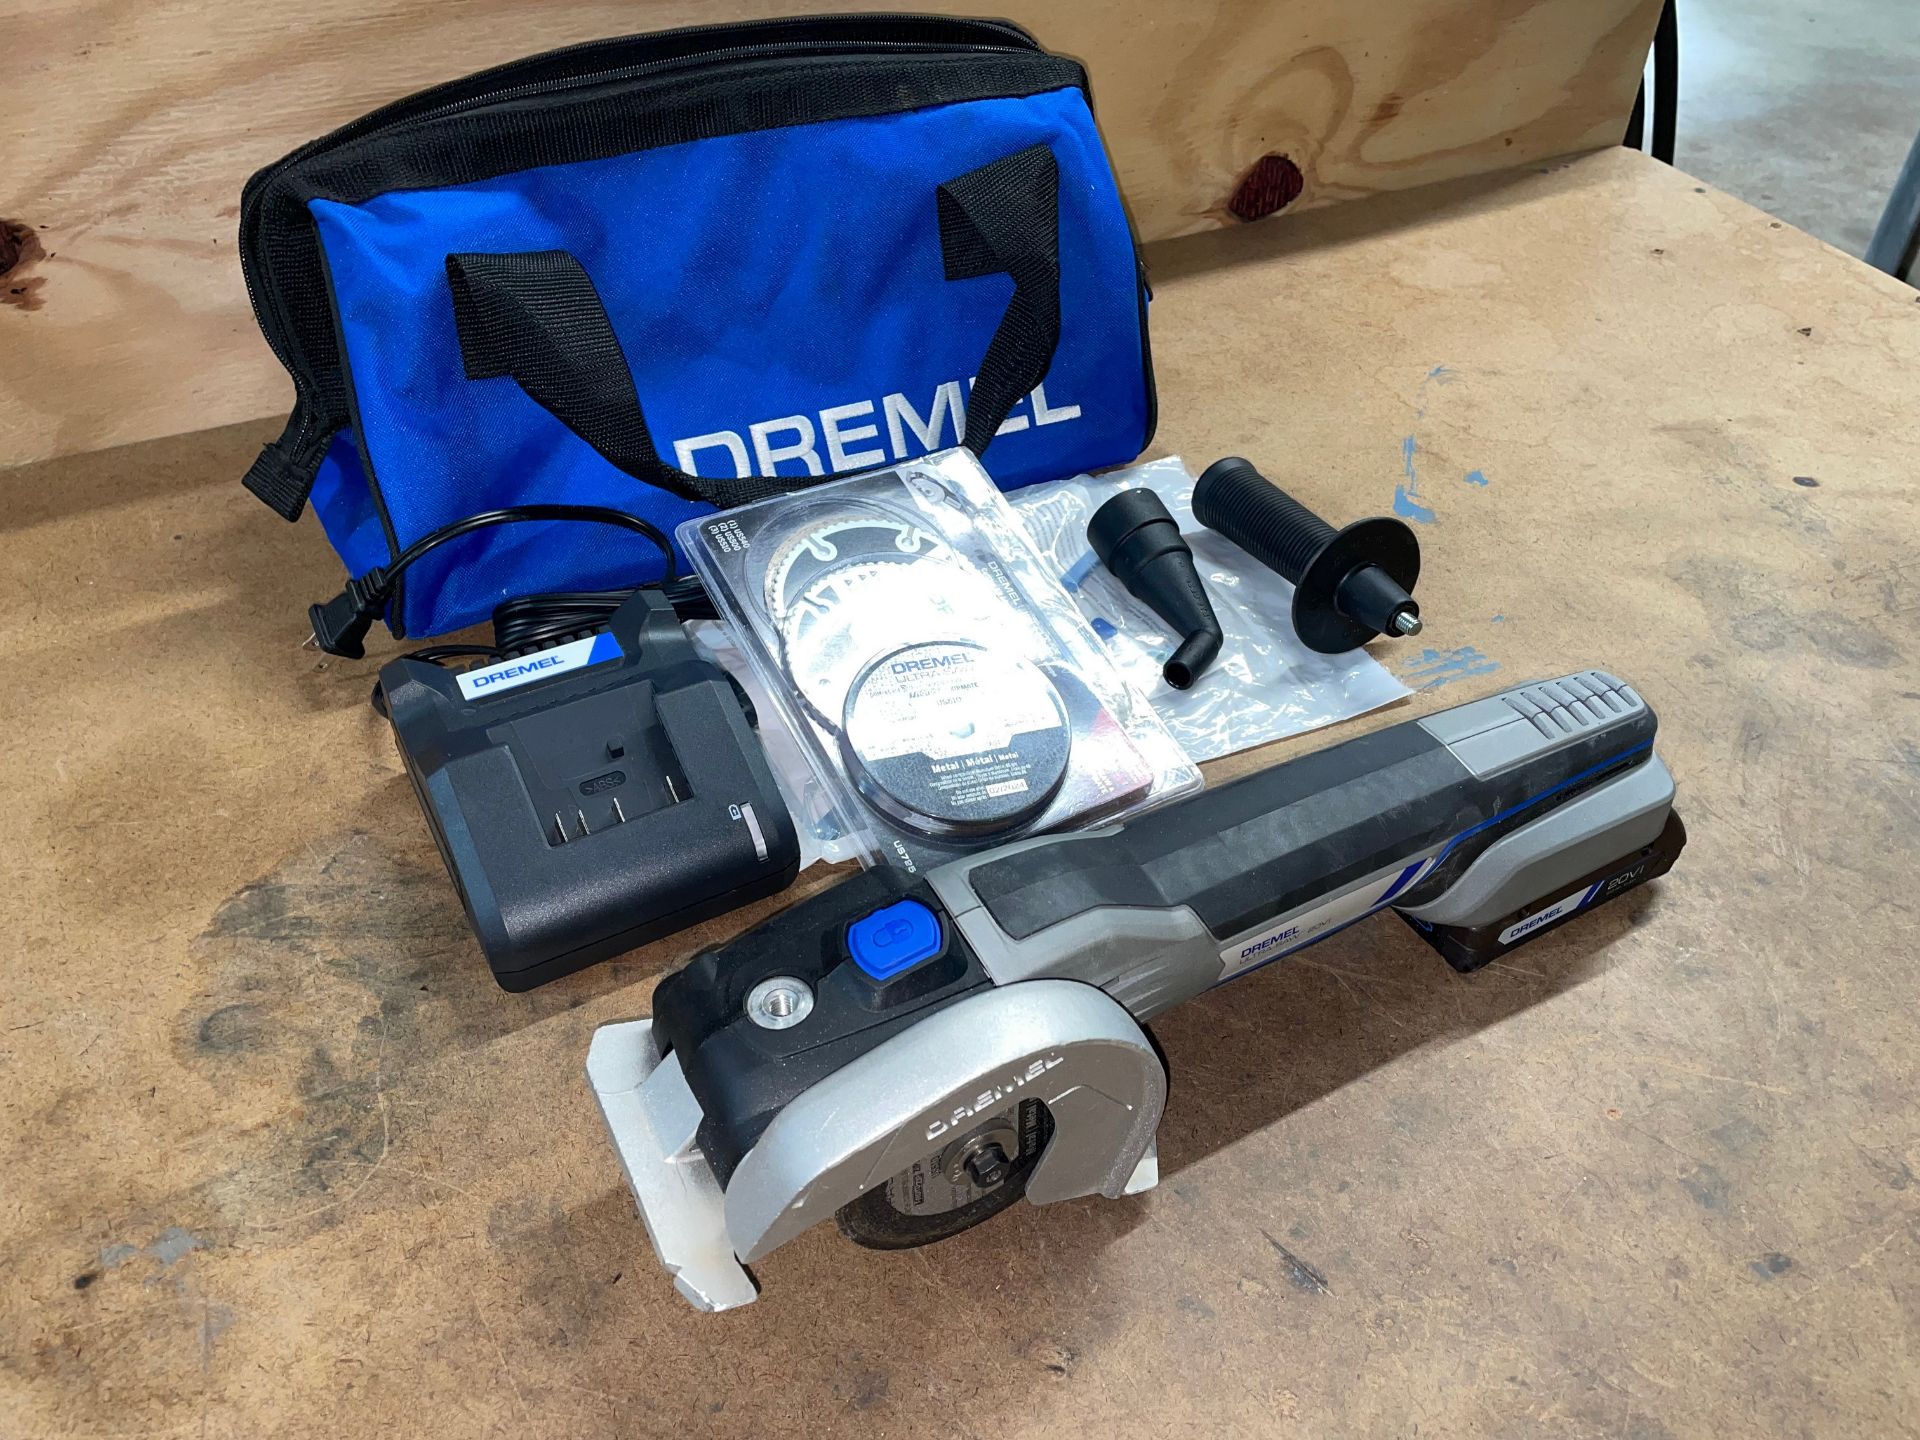 Dremel Ultra-Saw 20V Cordless Compact Saw Kit - Image 2 of 7